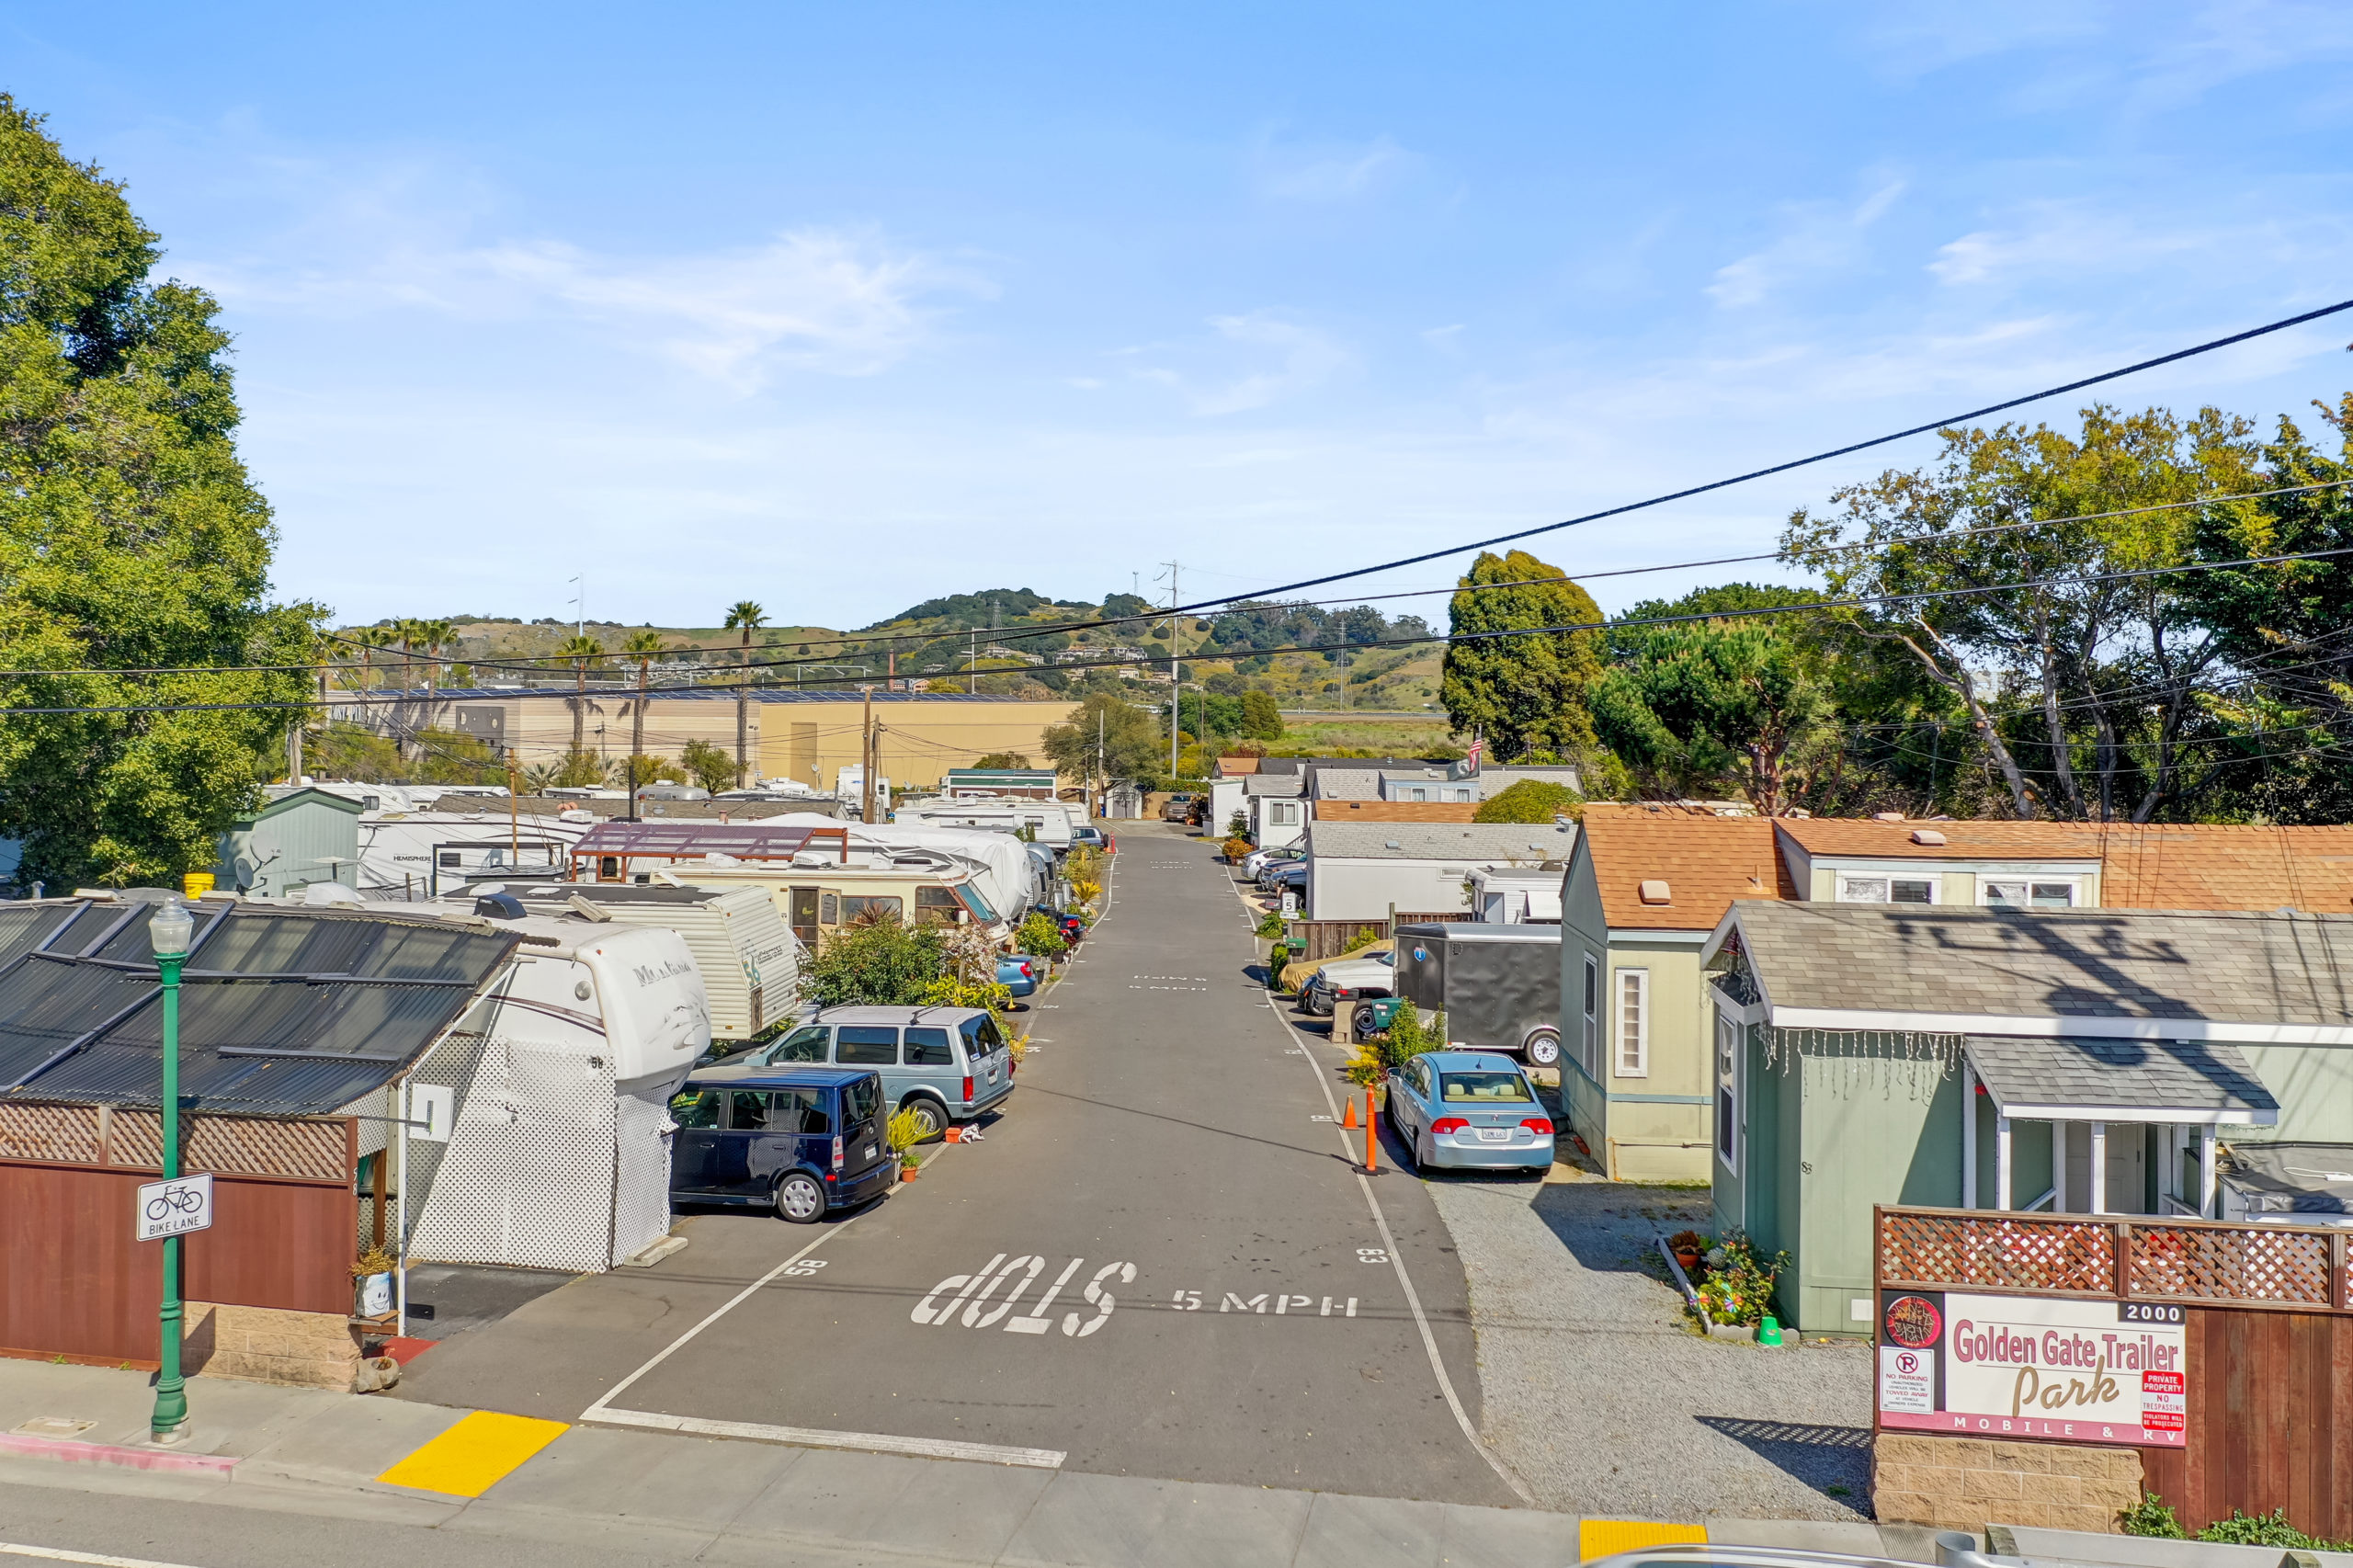 Street view of Golden Gate Trailer Park.